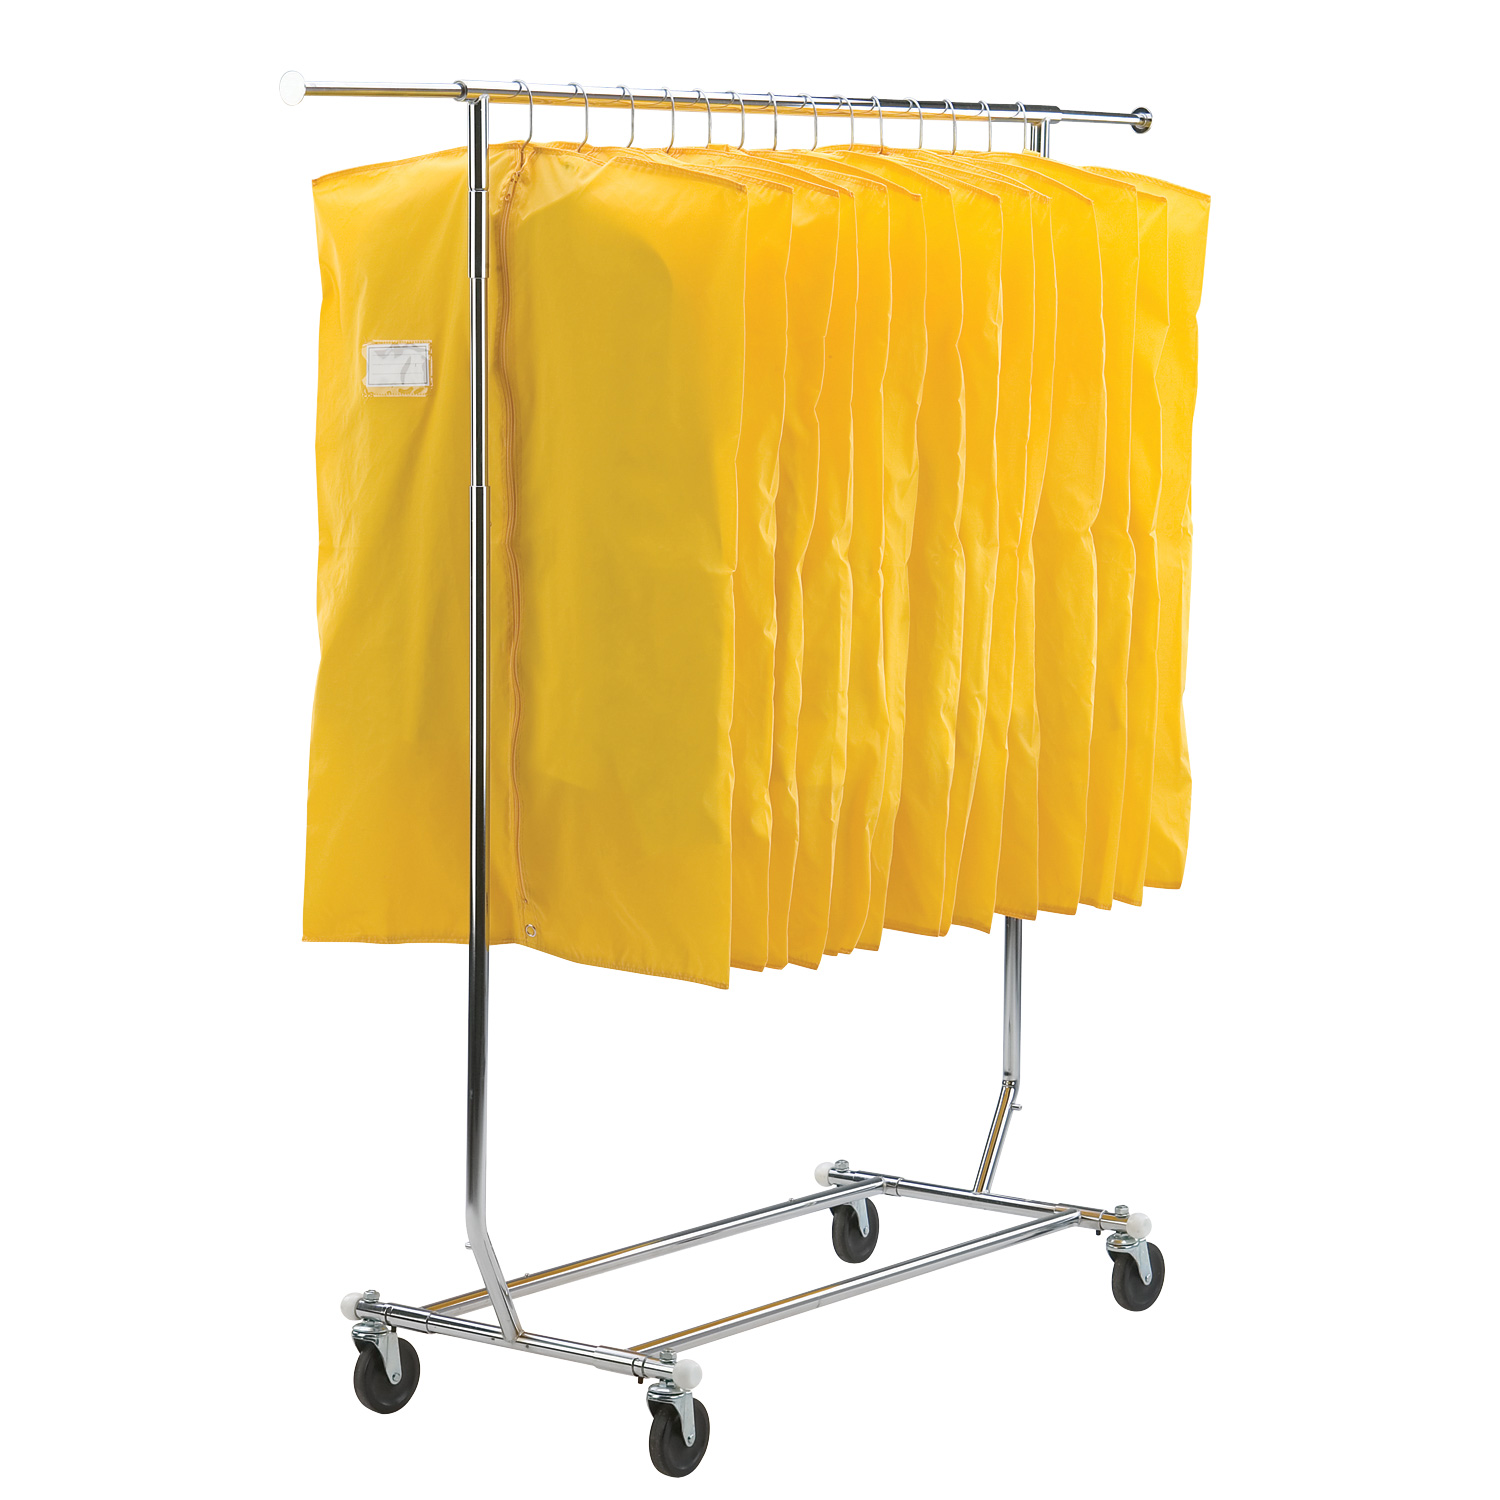 Uniform Storage Rack – Collapsible 1